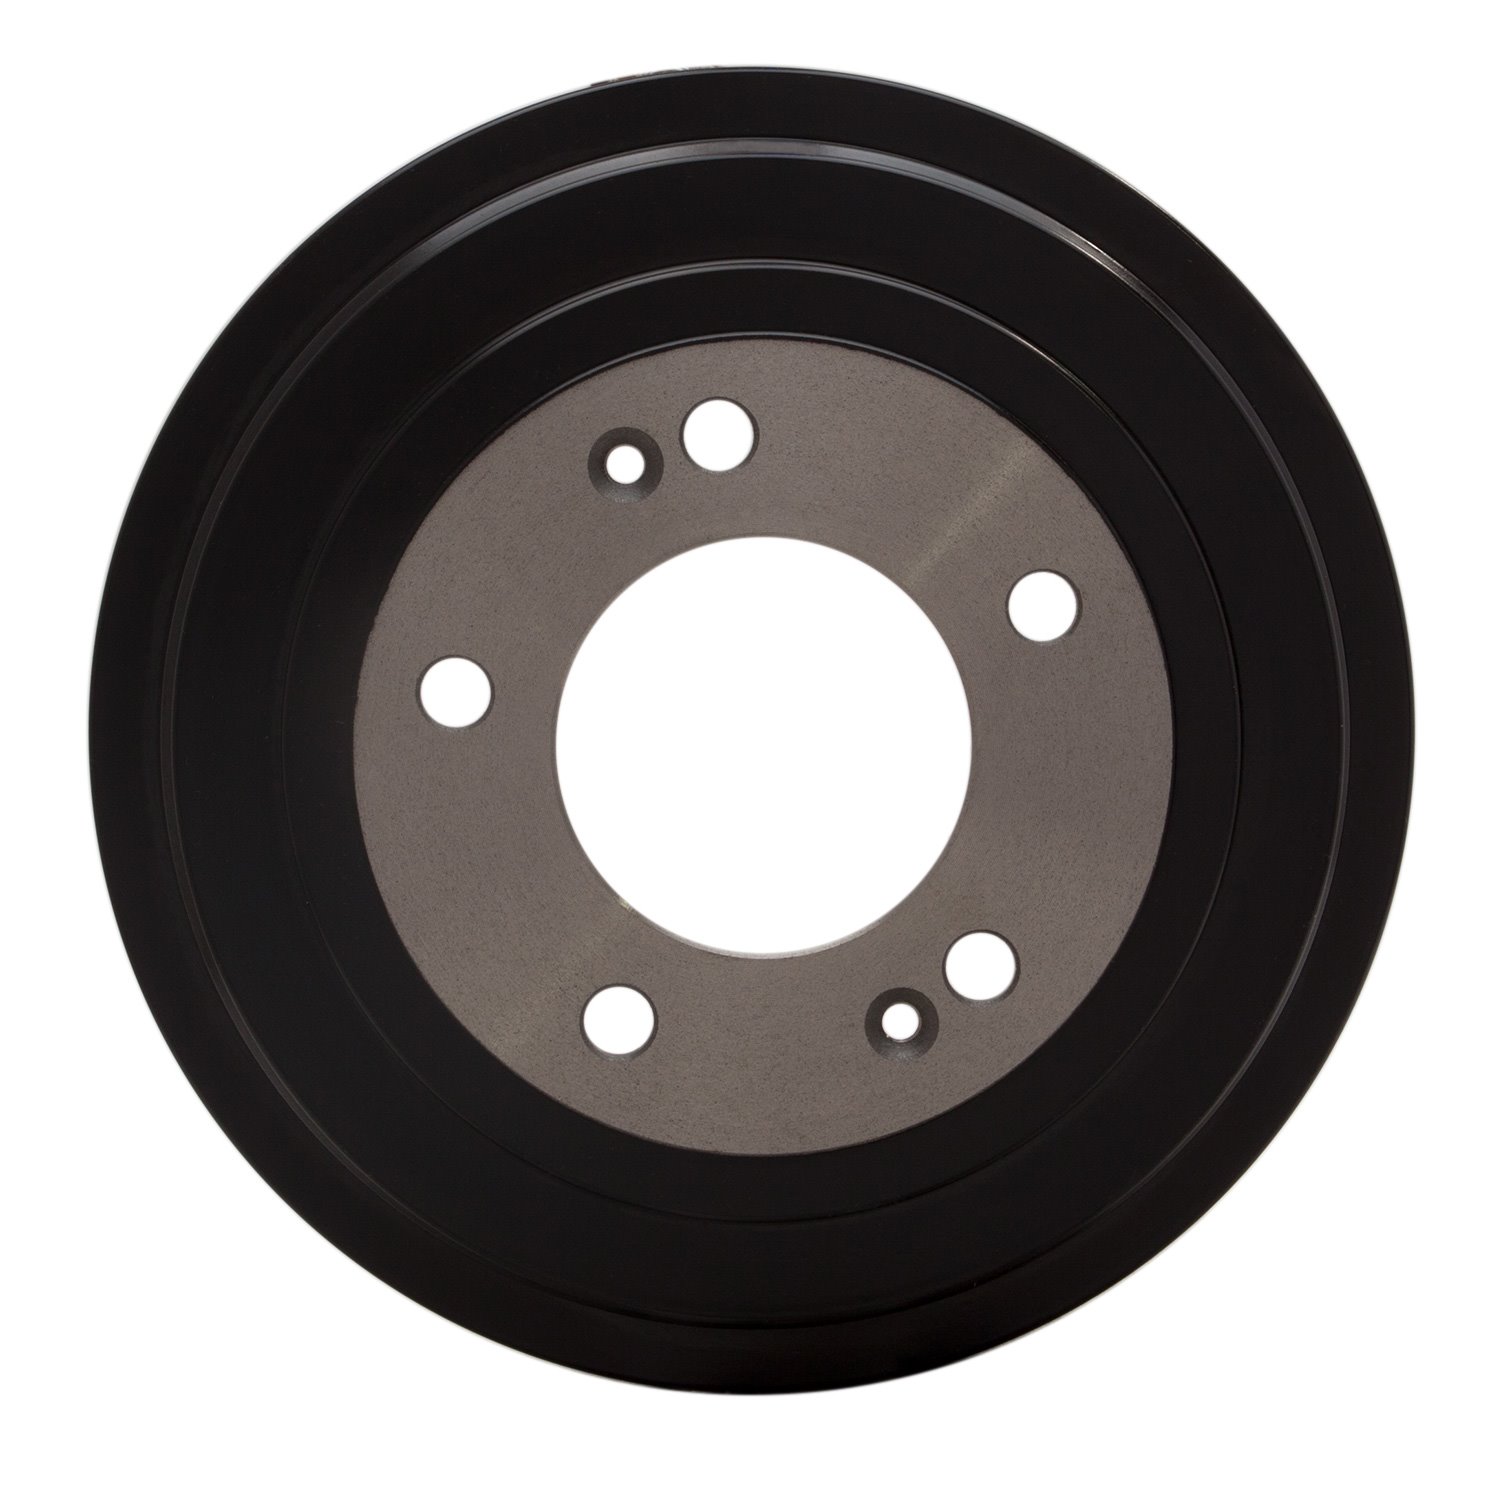 365-03019 True-Balanced Brake Drum, Fits Select Kia/Hyundai/Genesis, Position: Rear